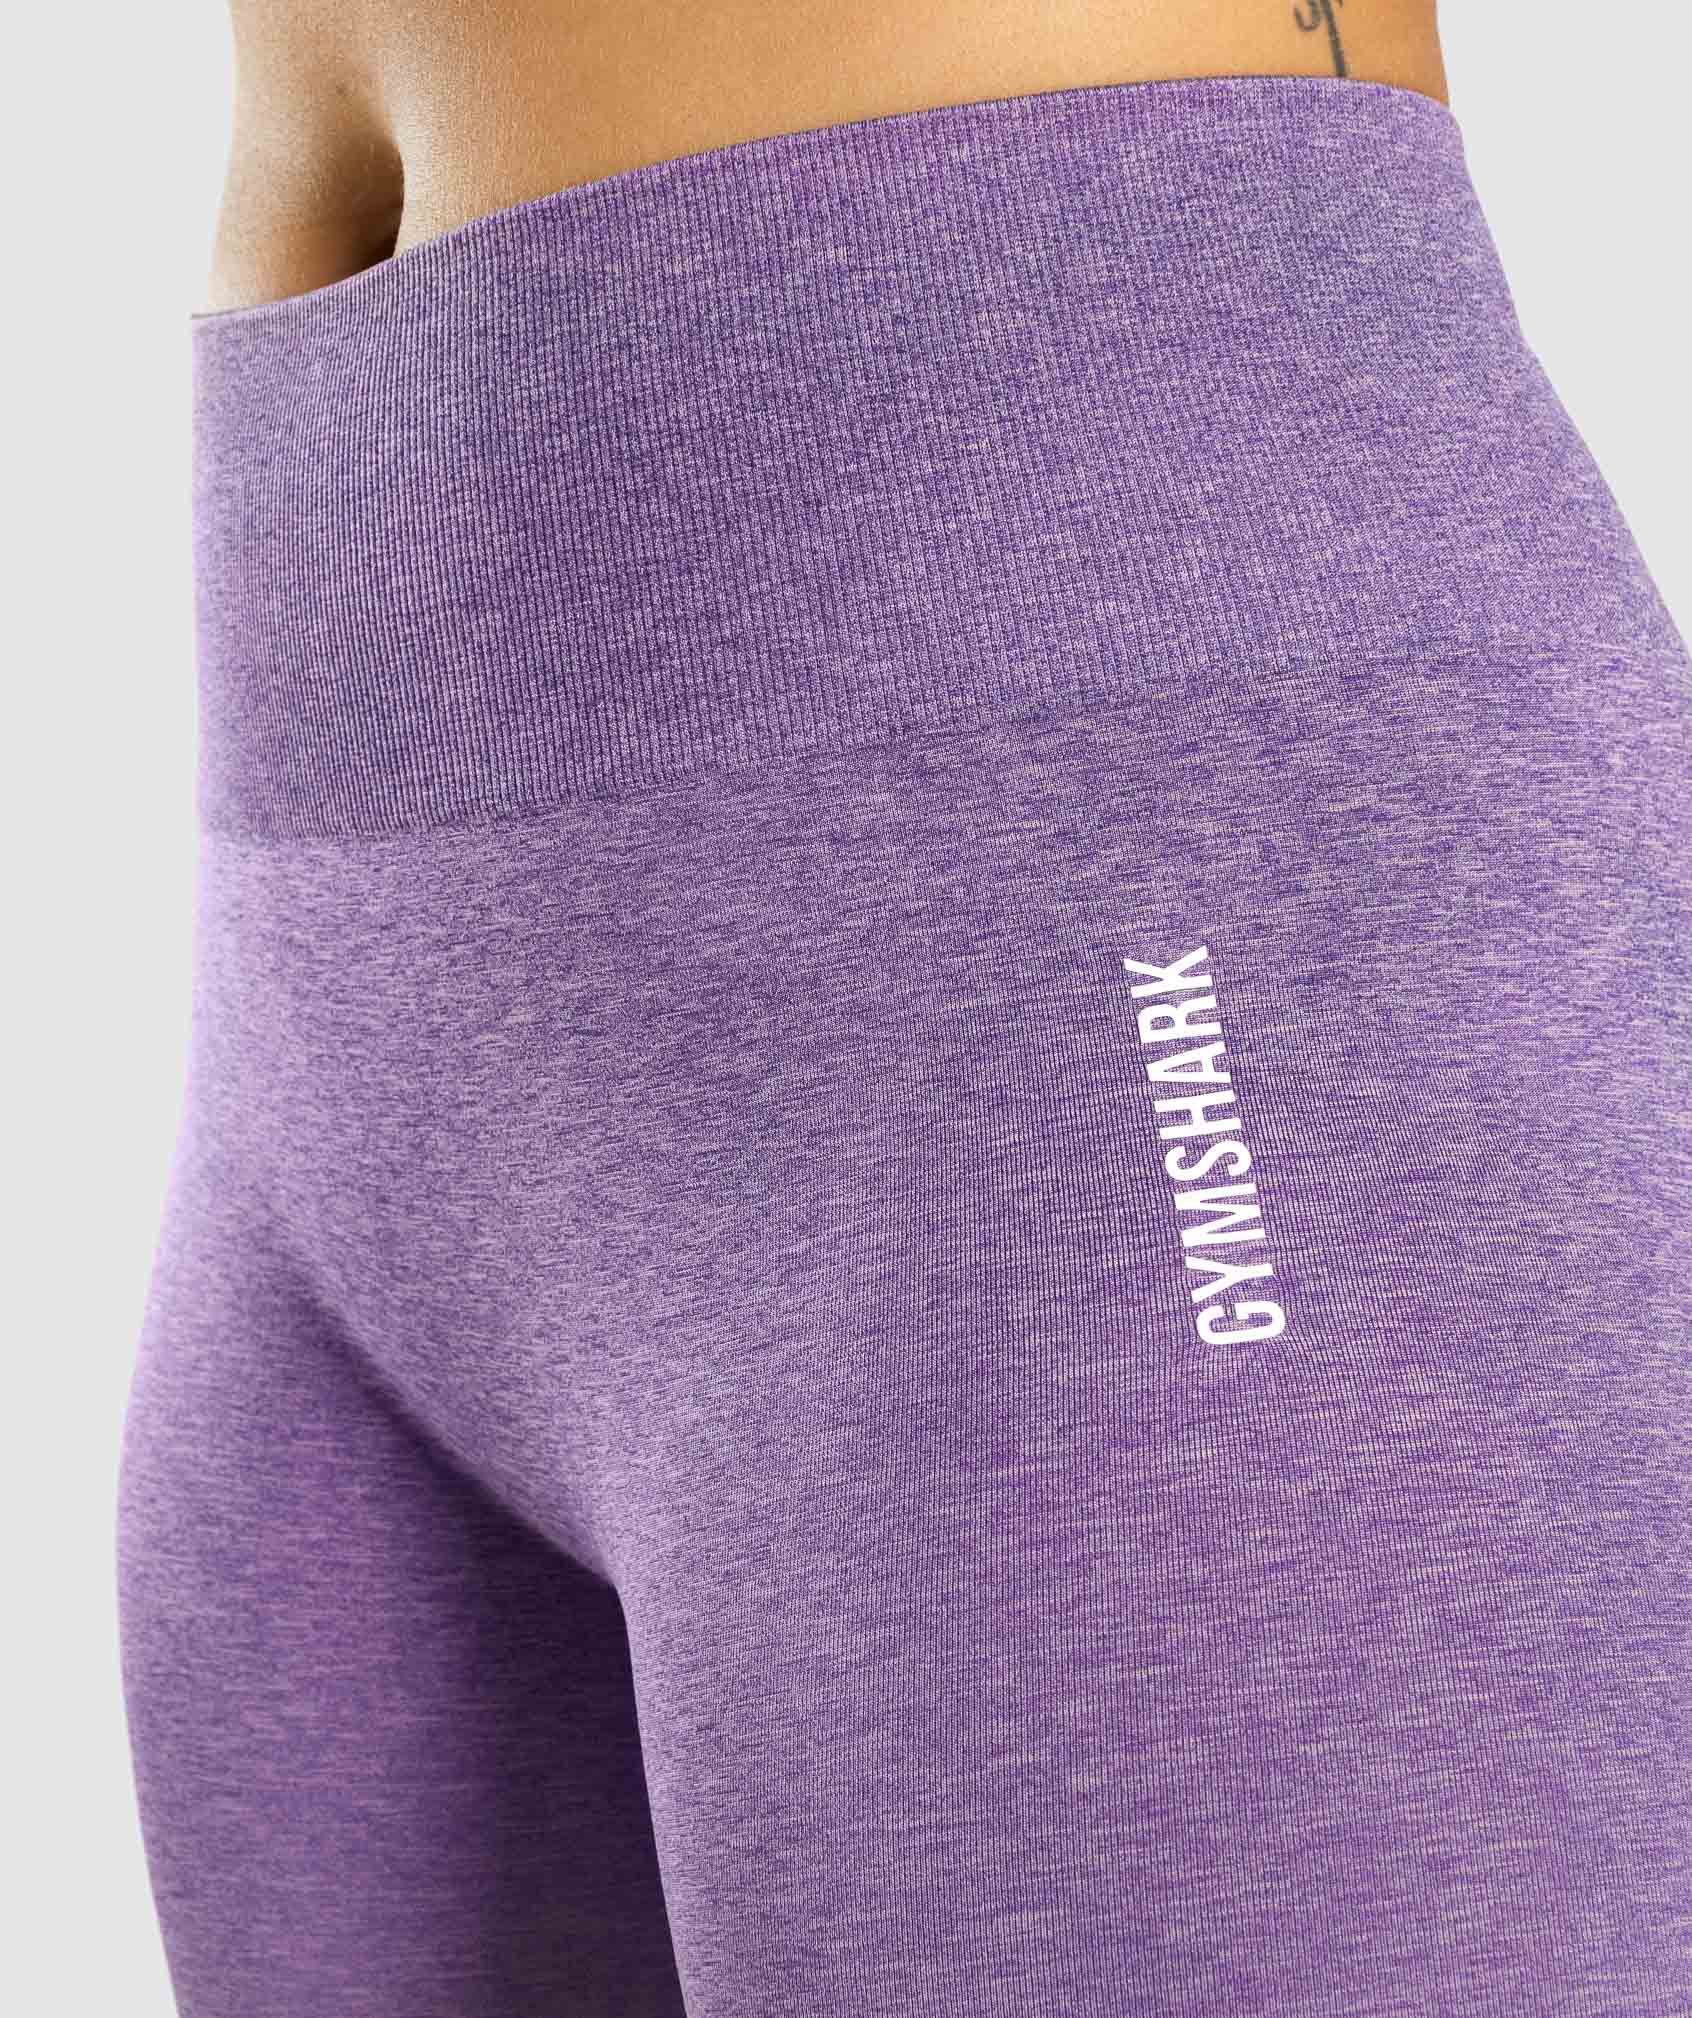 Adapt Ombre Seamless Leggings in Light Purple Marl/Purple